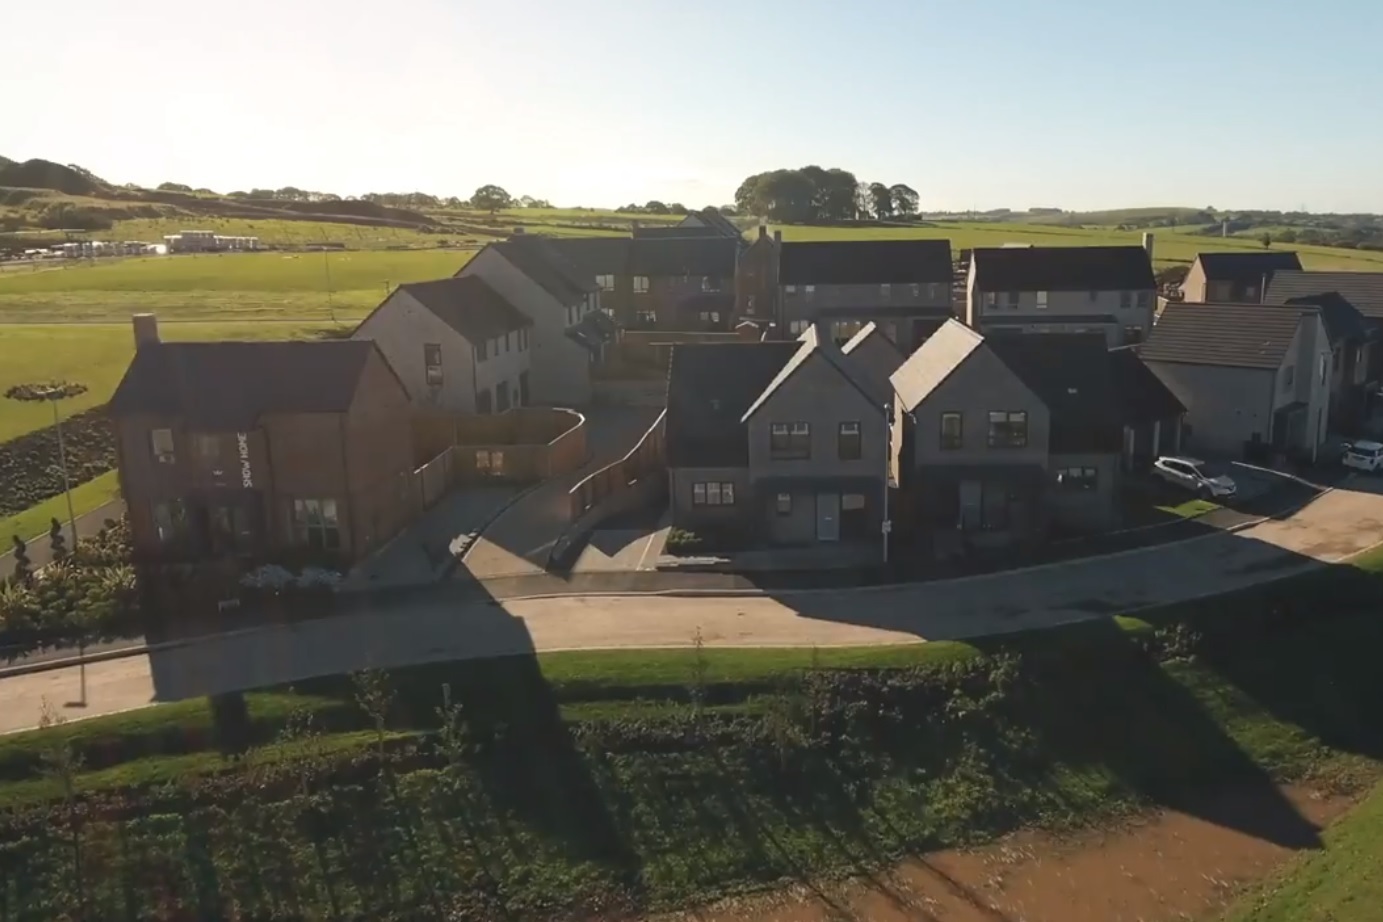 Watch drone footage showing new Wayne Hemmingway housing estate